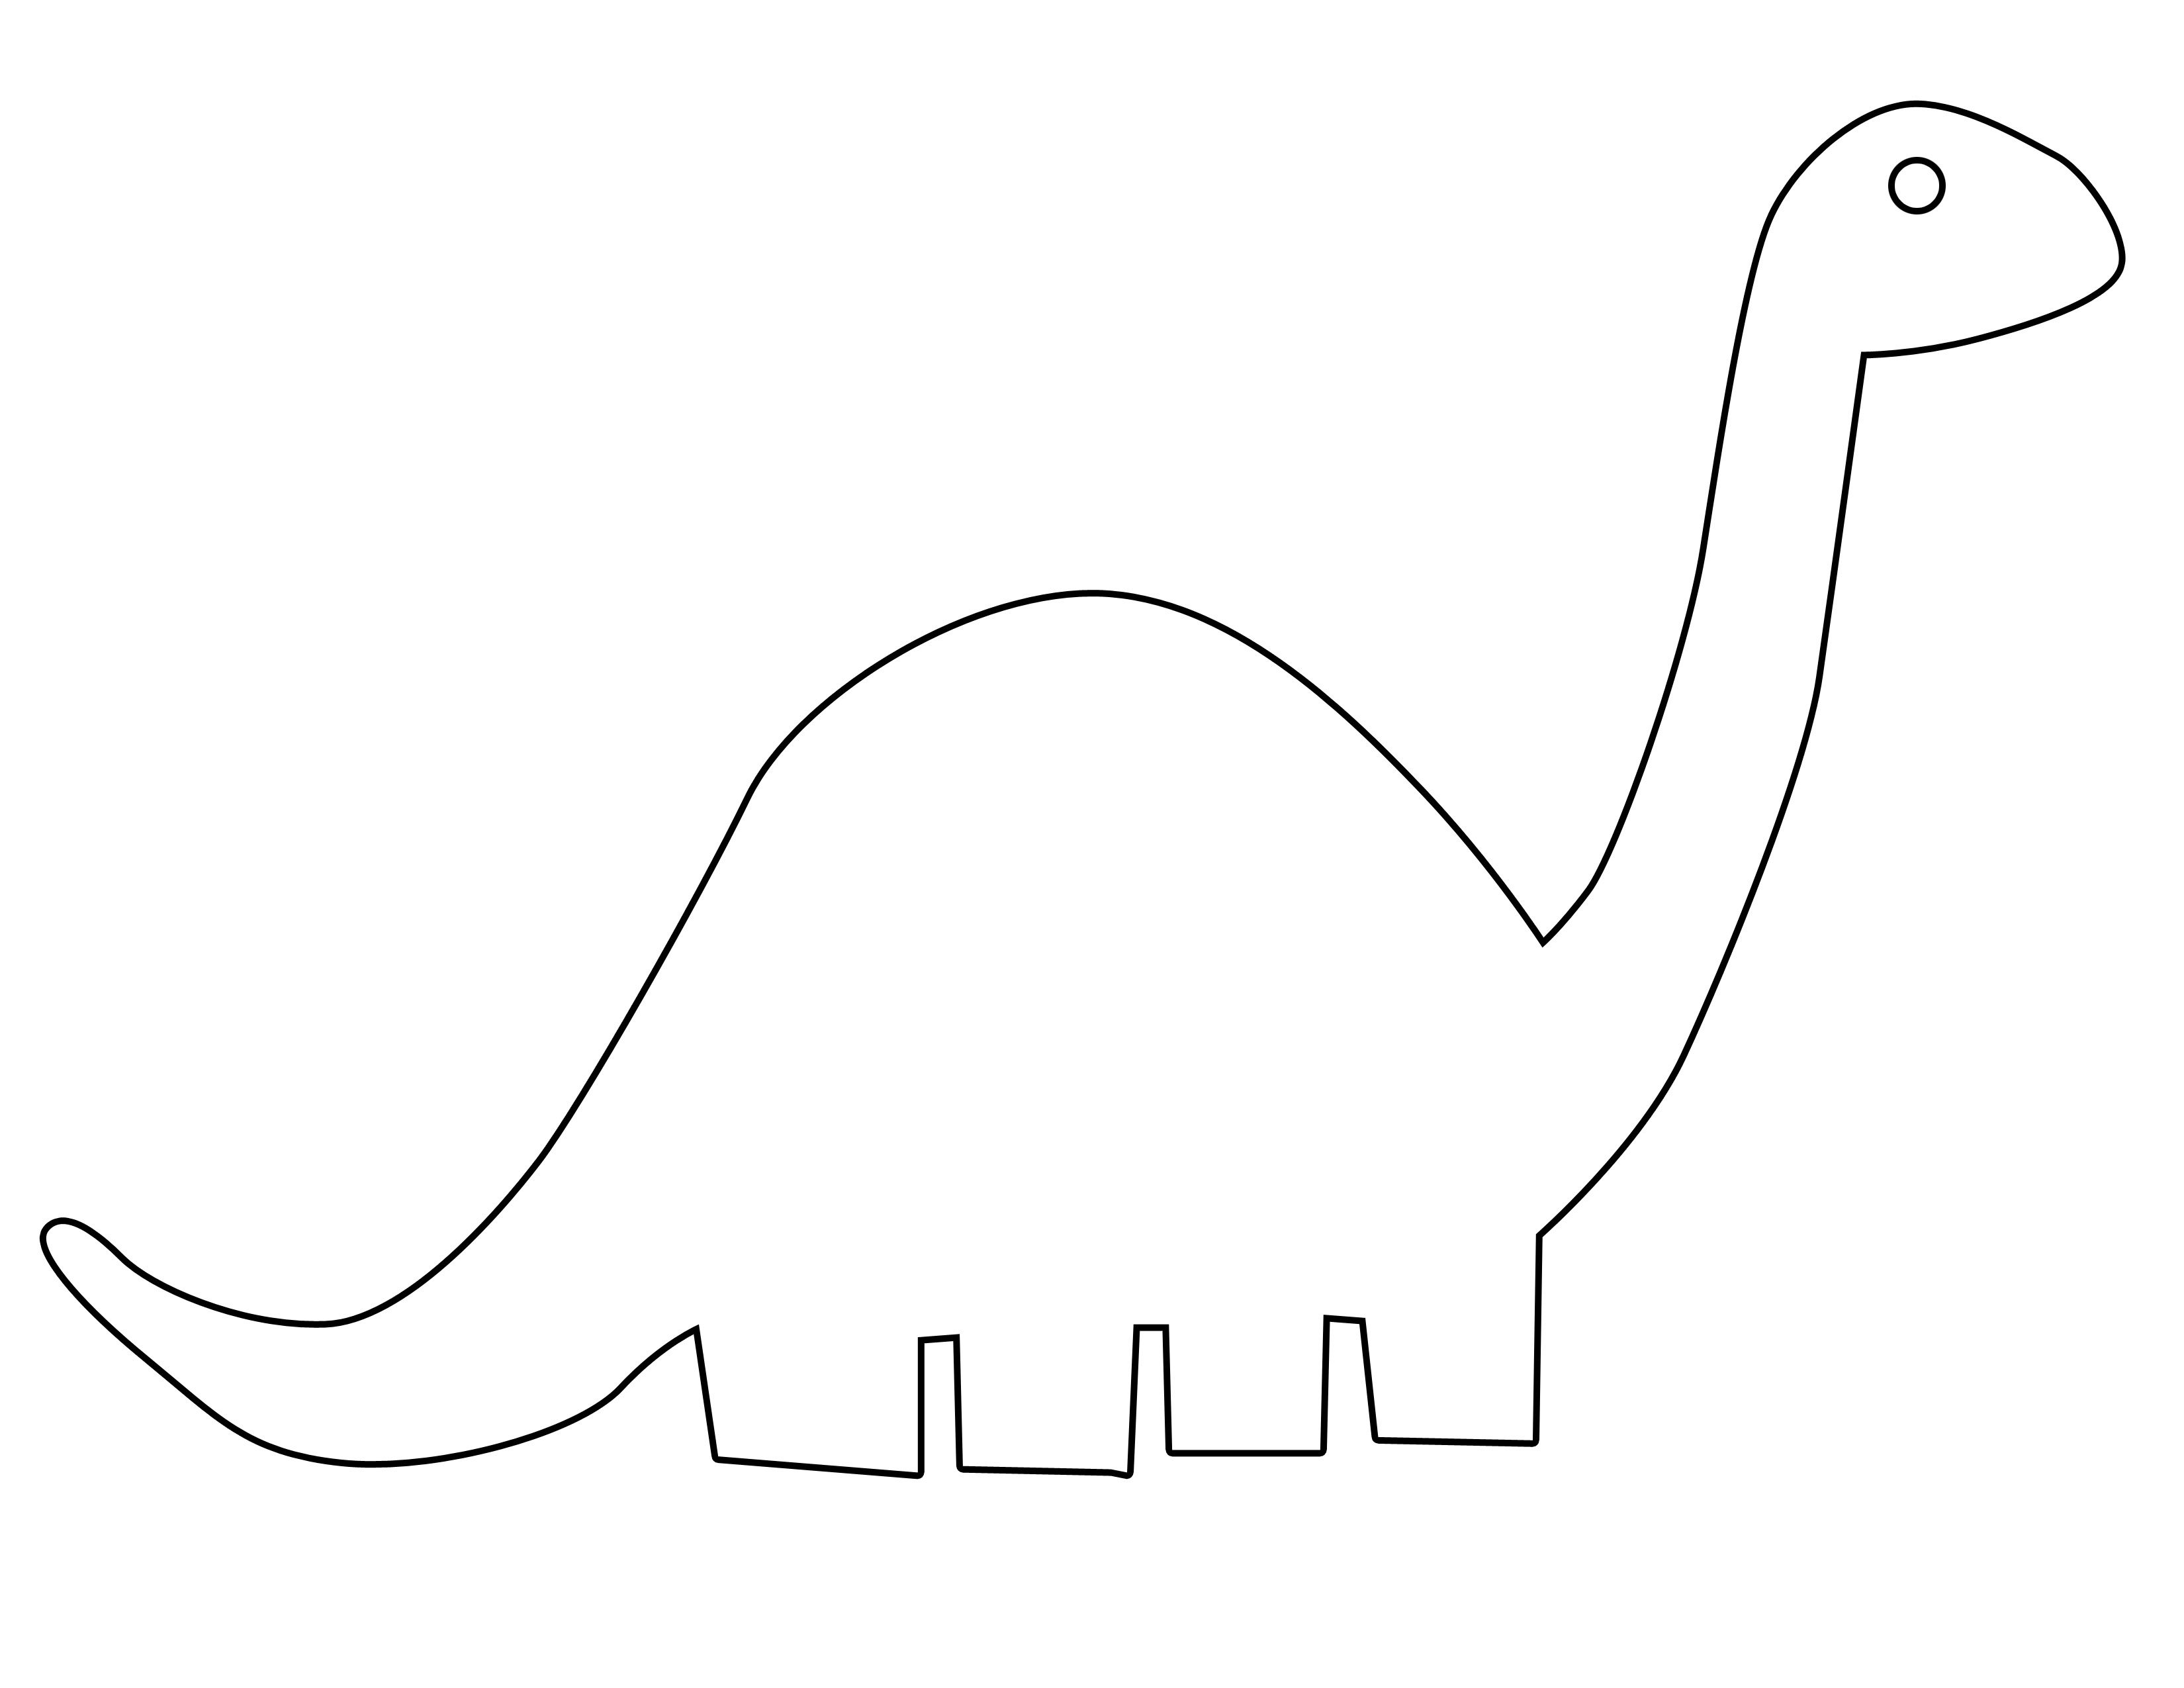 free-dinosaur-templates-download-free-dinosaur-templates-png-images